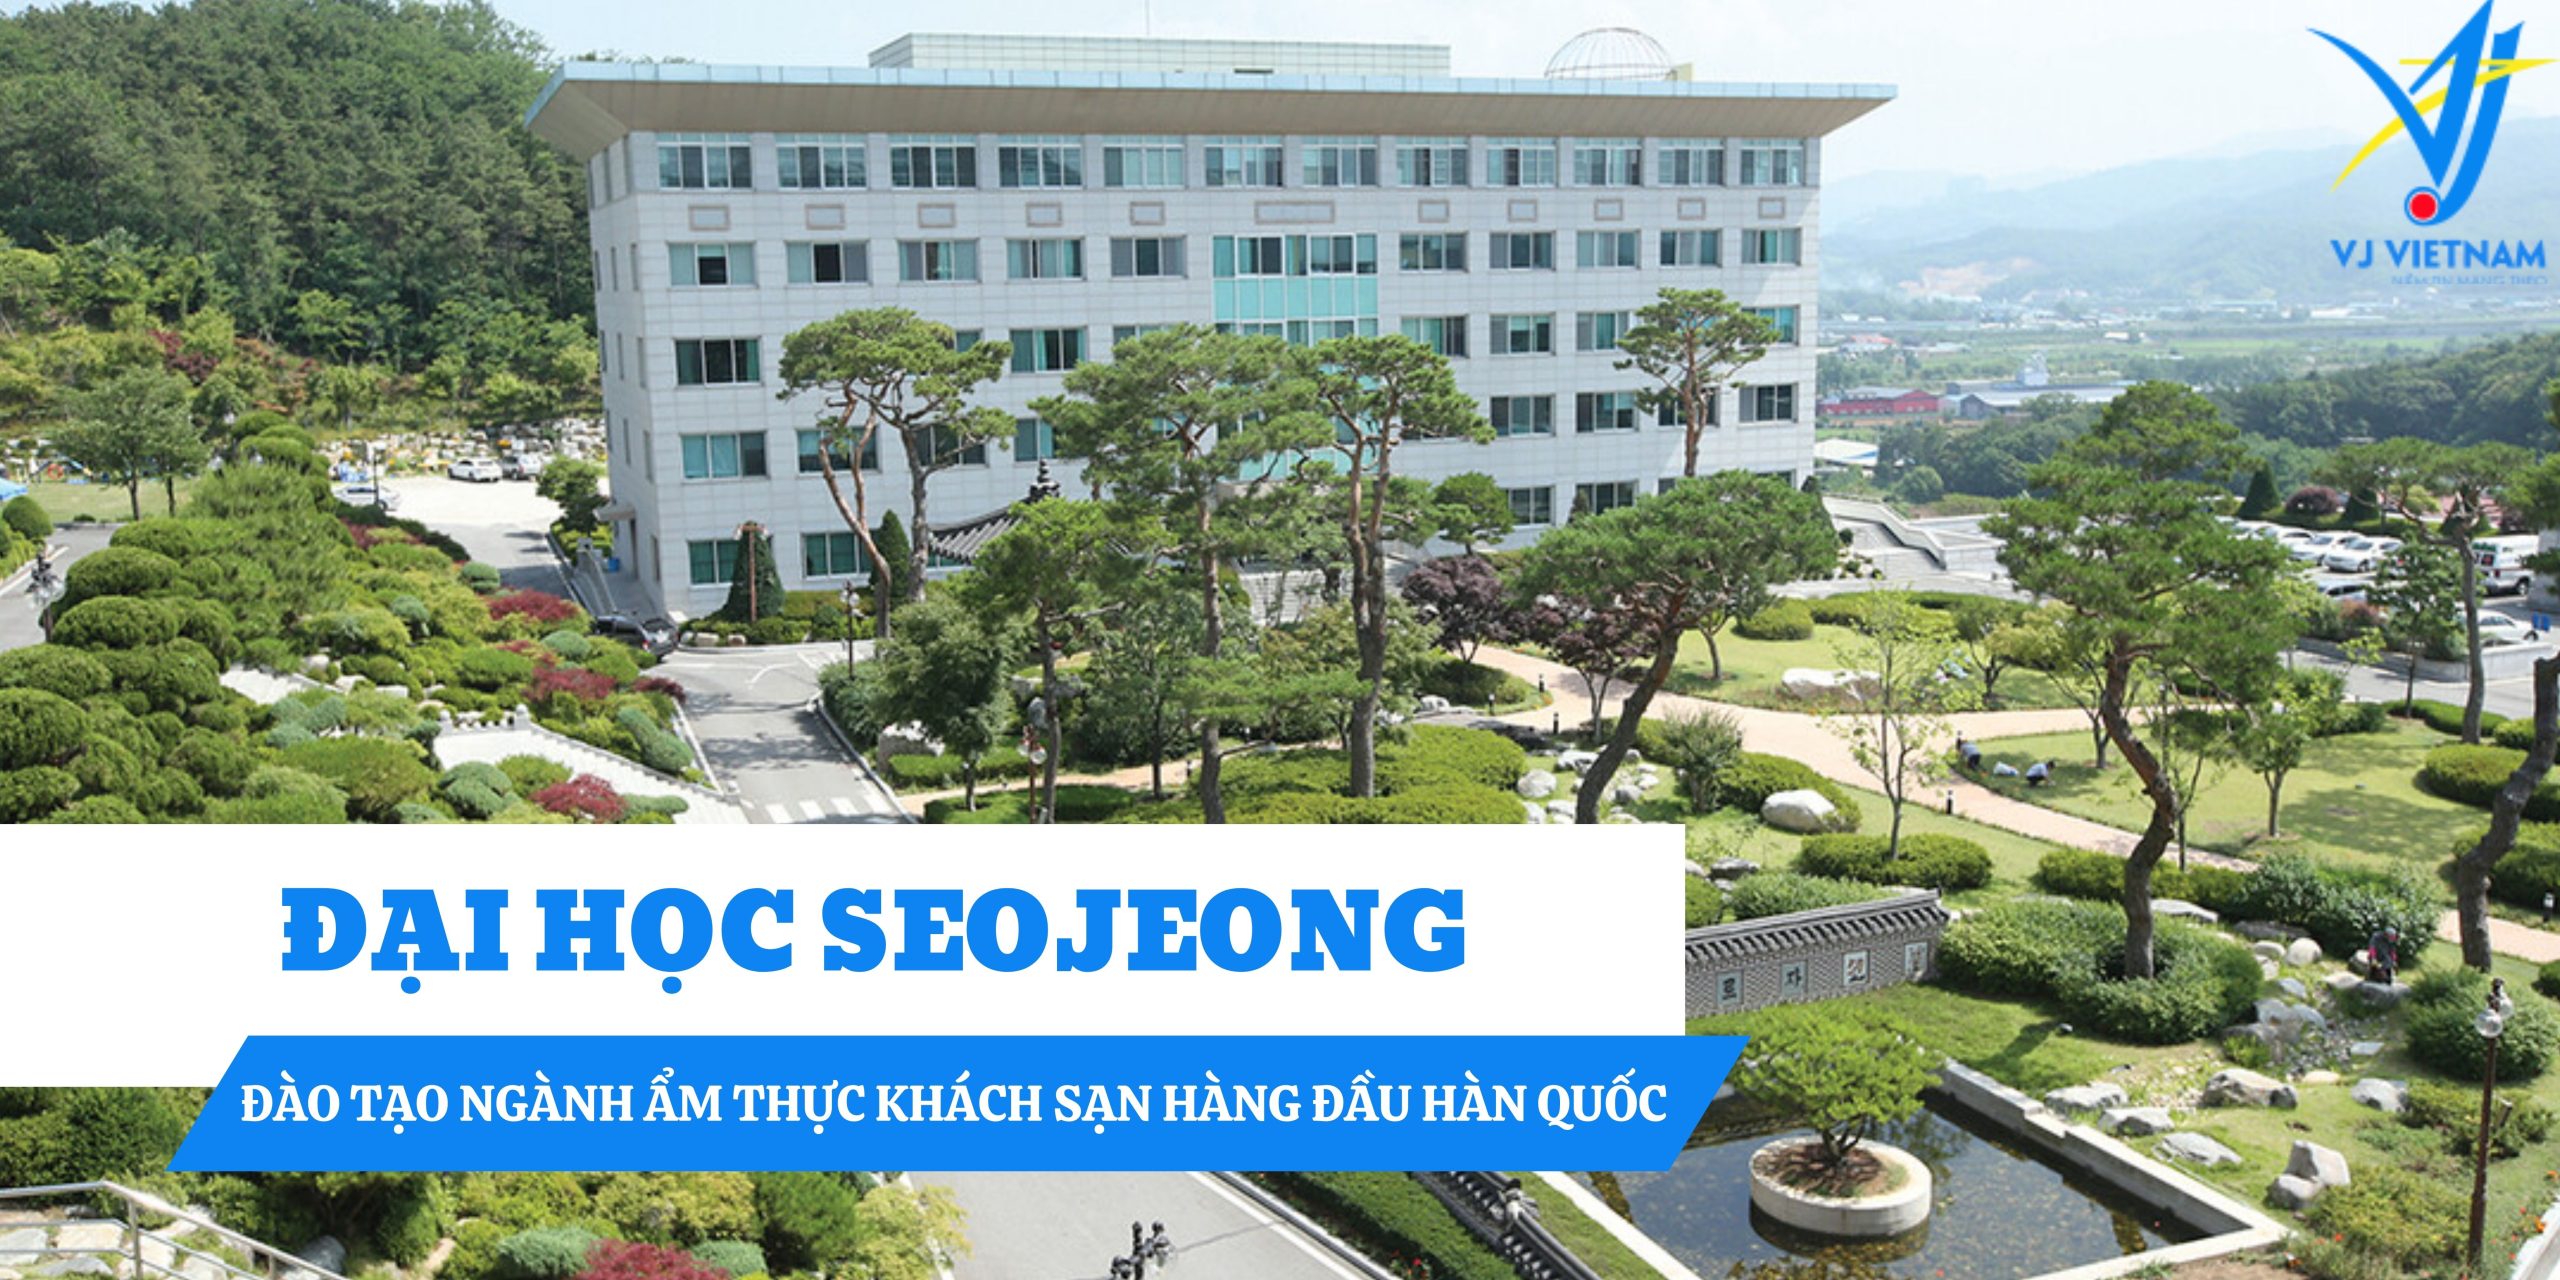 Dai hoc Seojeong scaled